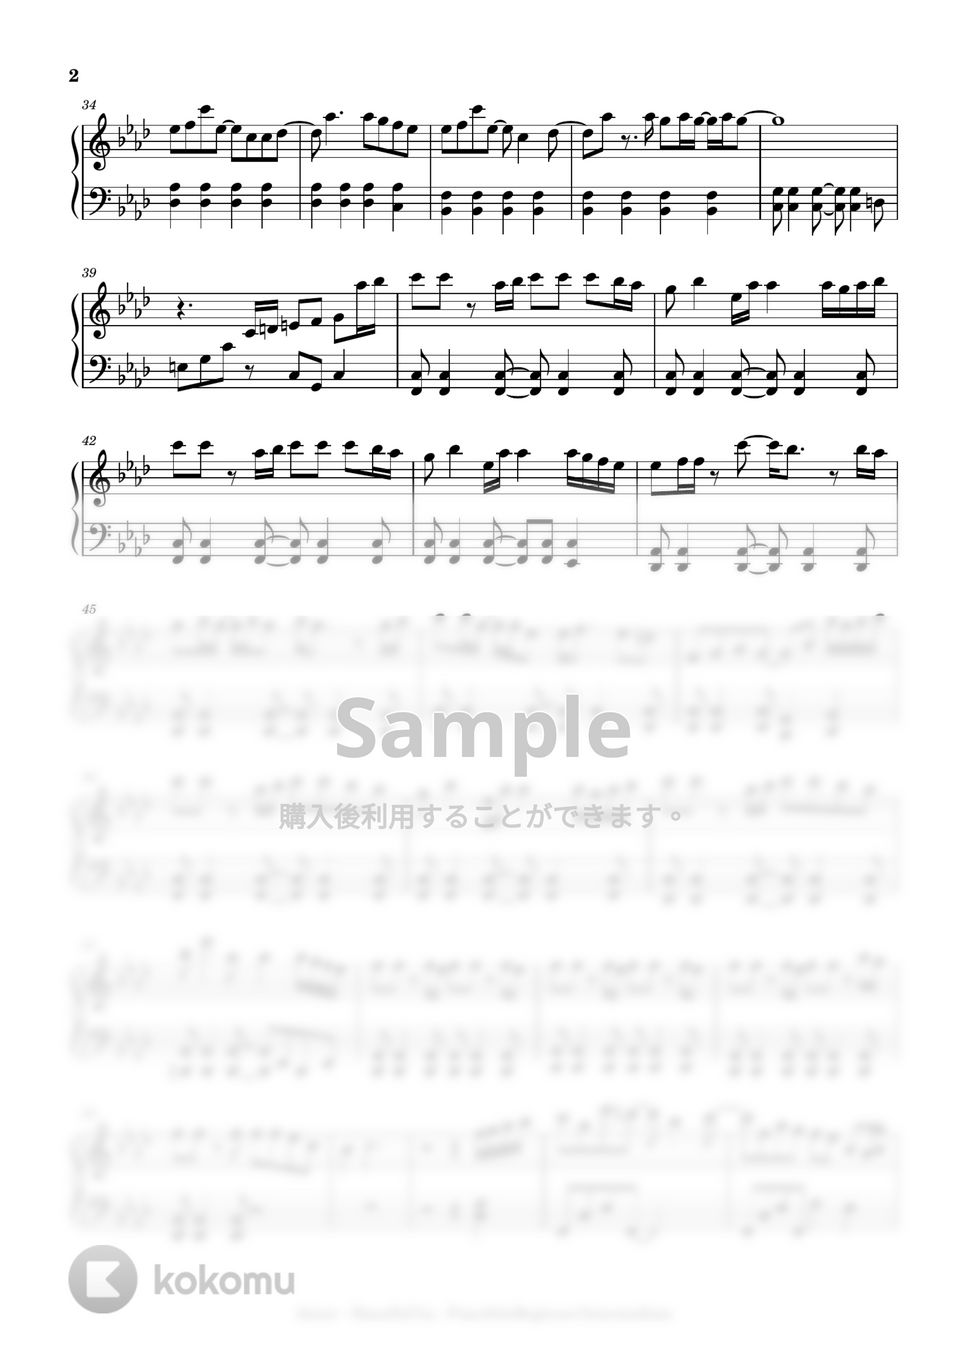 Aimer - Hana no Uta (beginner to intermediate, piano) by Mopianic